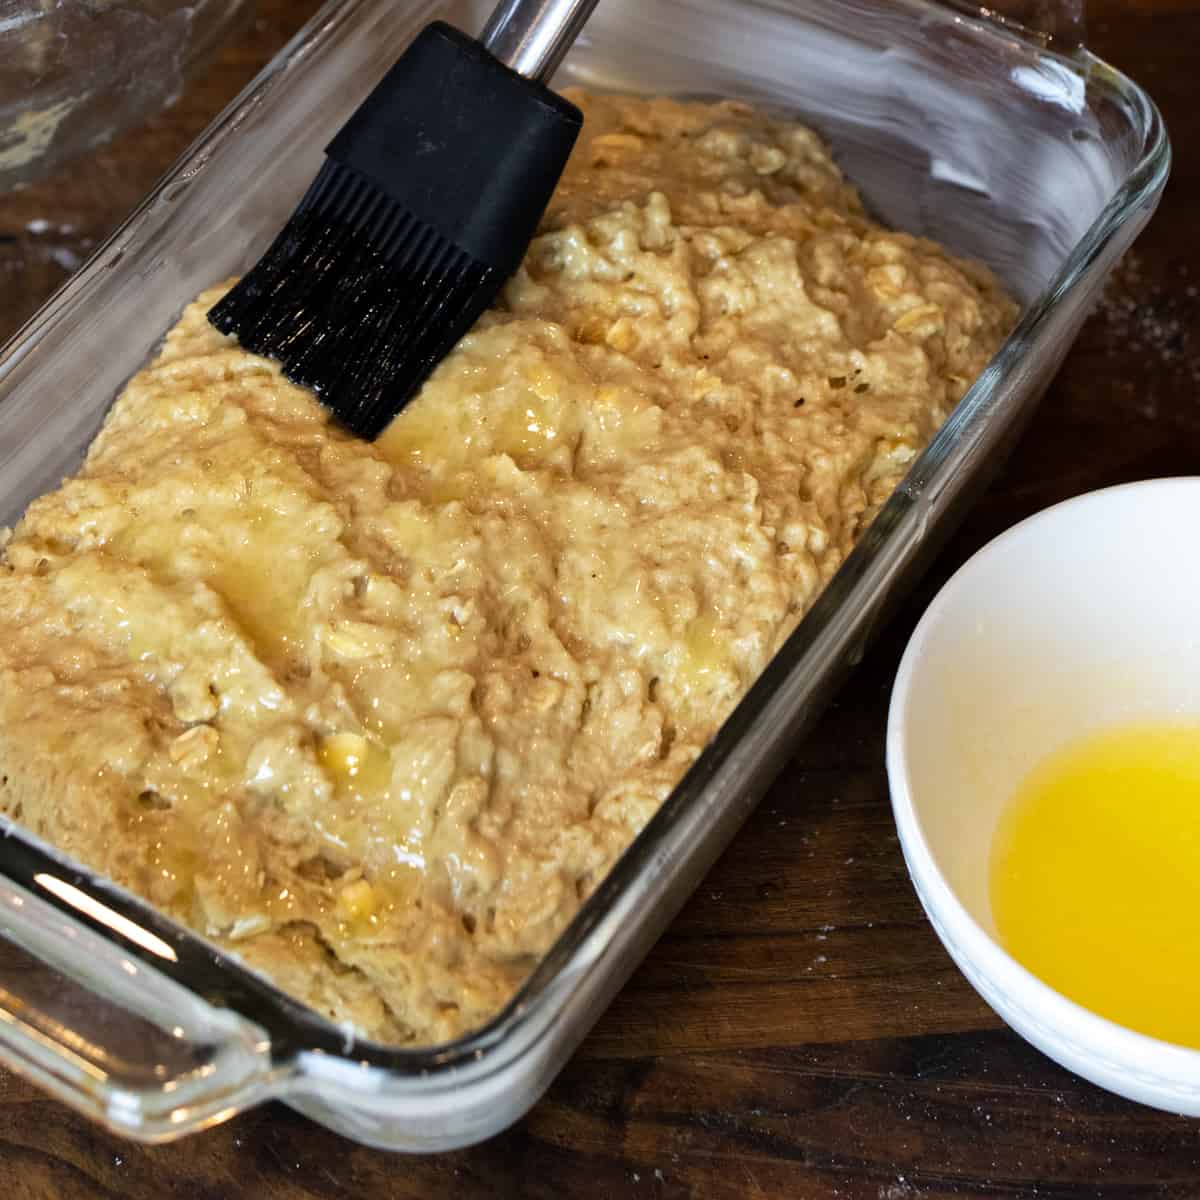 Melted butter being brushed onto batter in loaf pan.